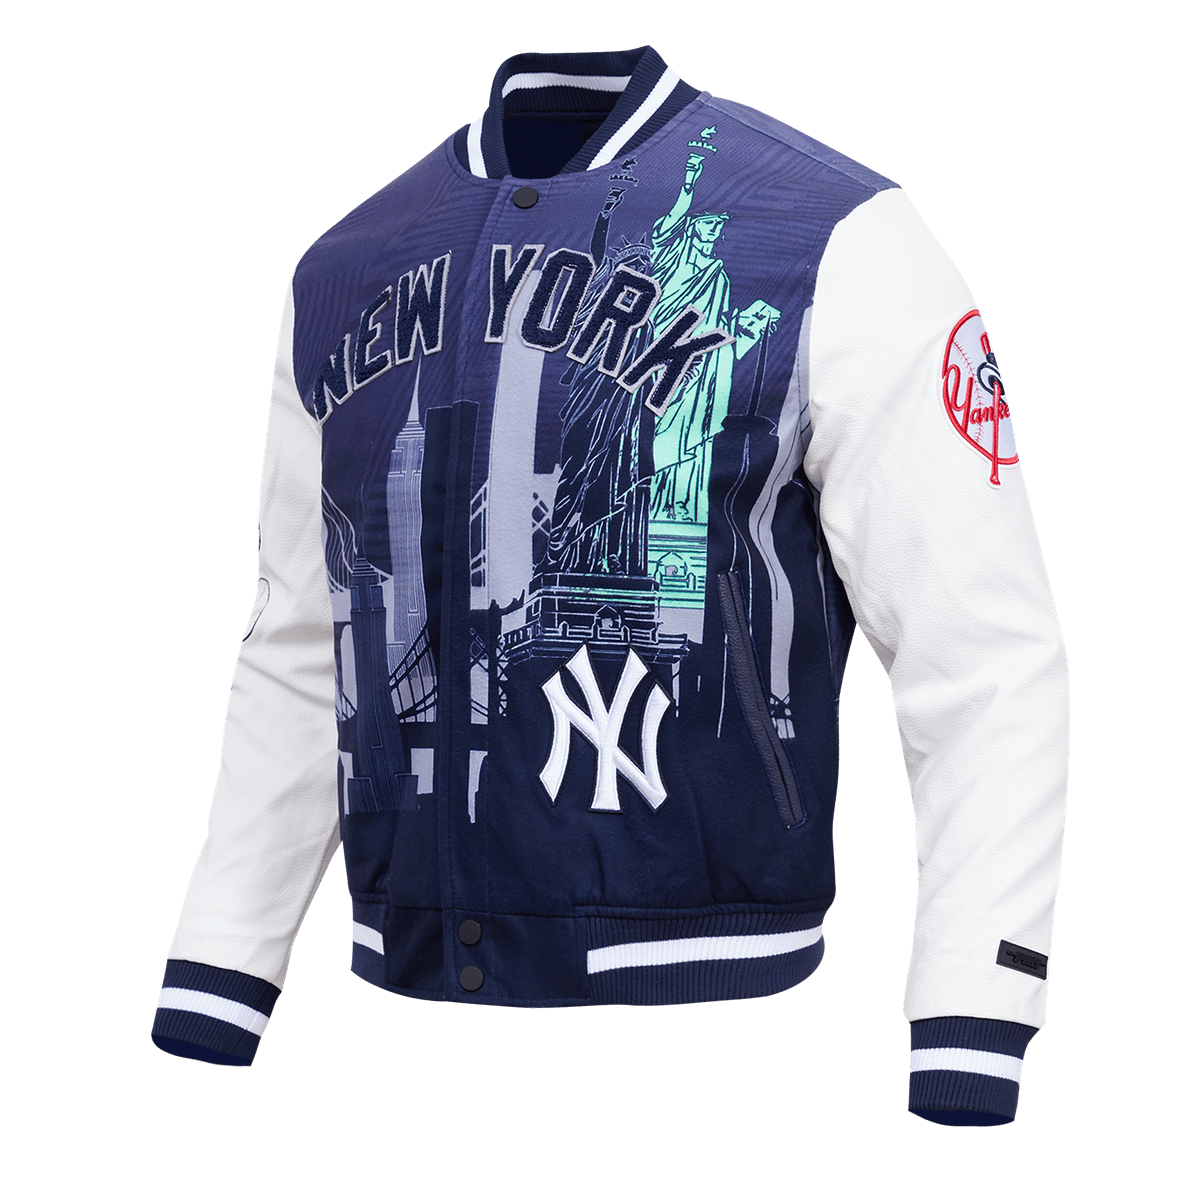 Maker of Jacket Fashion Jackets New York Yankees Pro Standard Navy Varsity